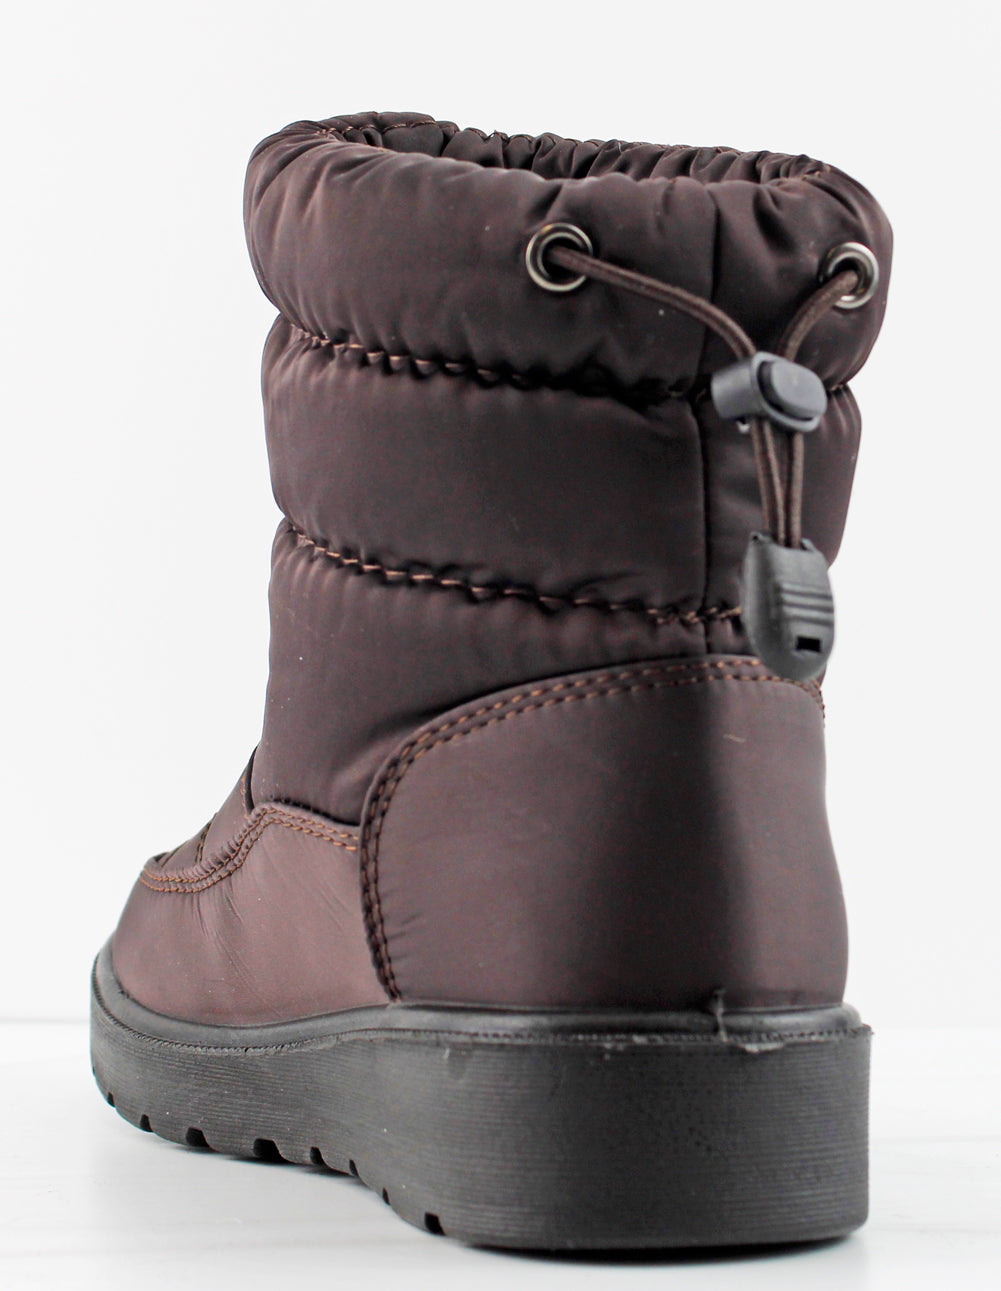 Coleen 1K Little Girls Insulated Fur Lined Rain/Snow Boots